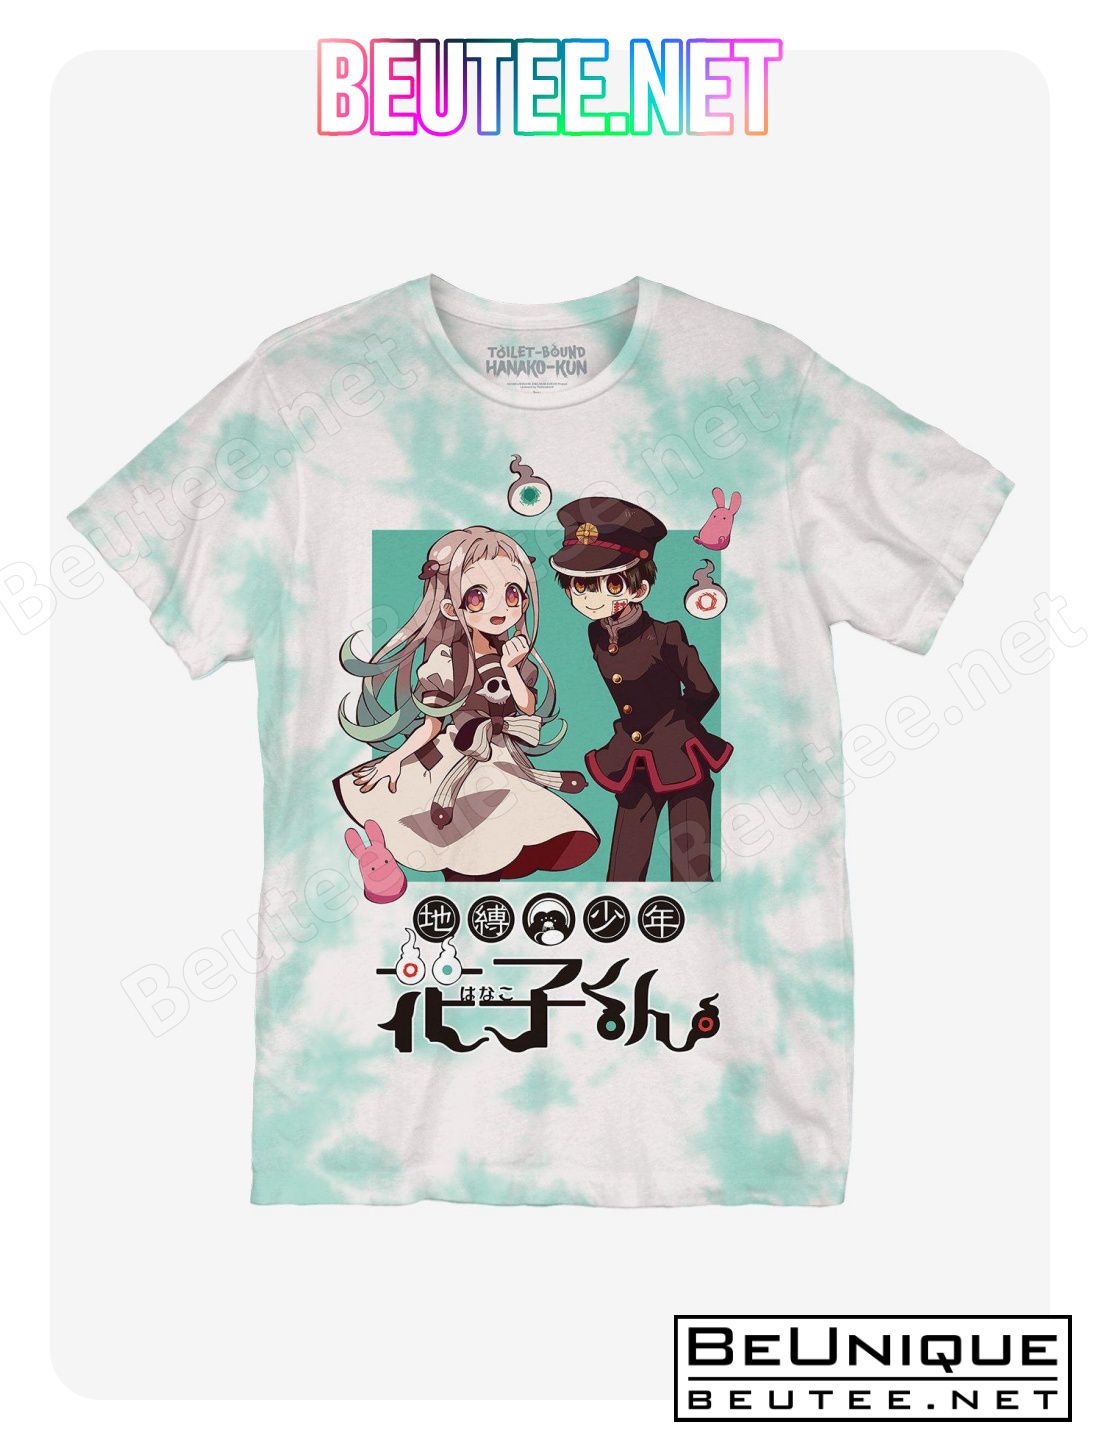 Toilet-Bound Hanako-Kun Yashiro Nene & Hananko Boyfriend Fit Girls T-Shirt